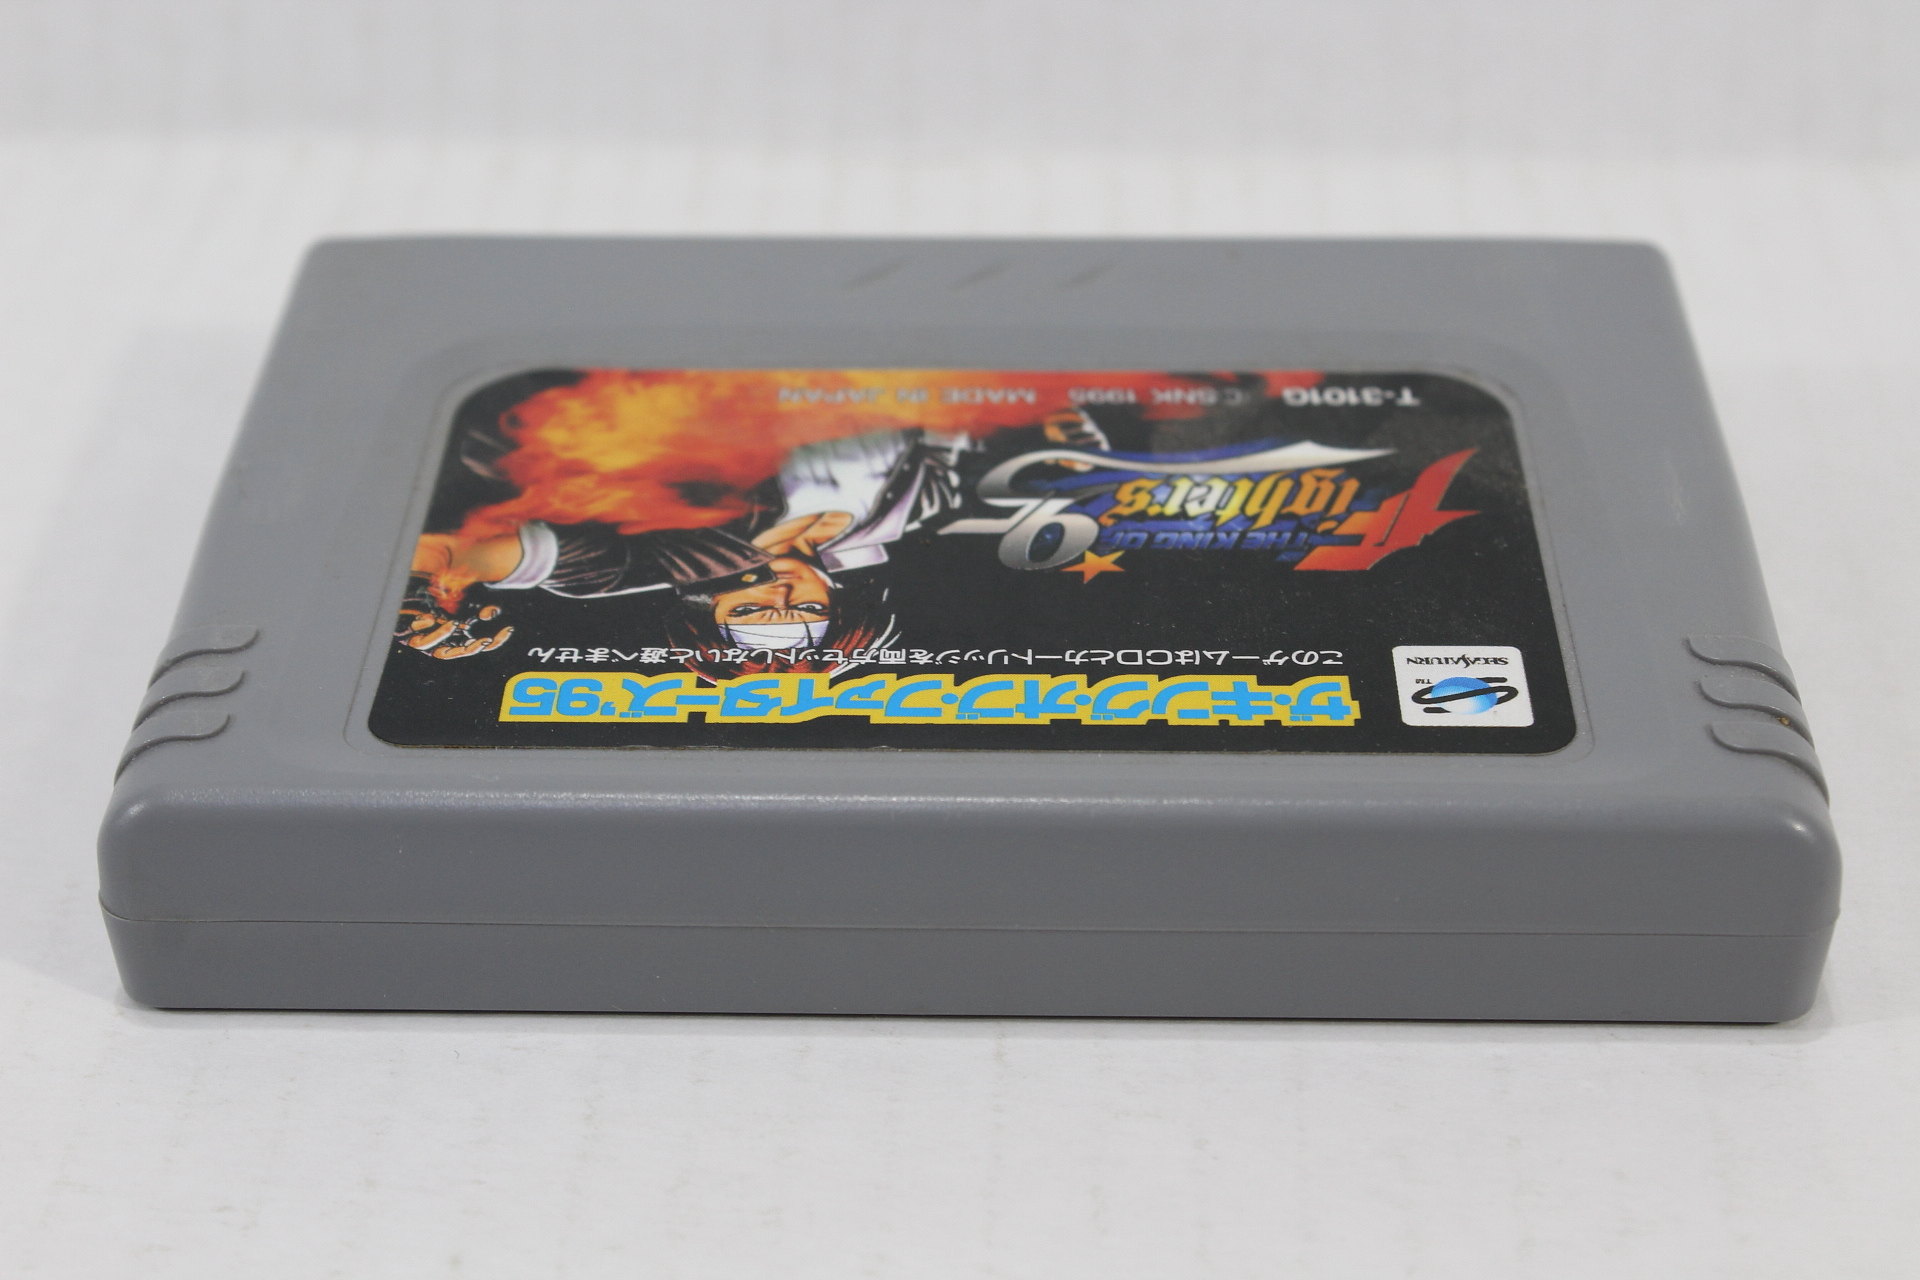 Sega Saturn ROM / RAM Cartridge for the King of Fighters 95 (B